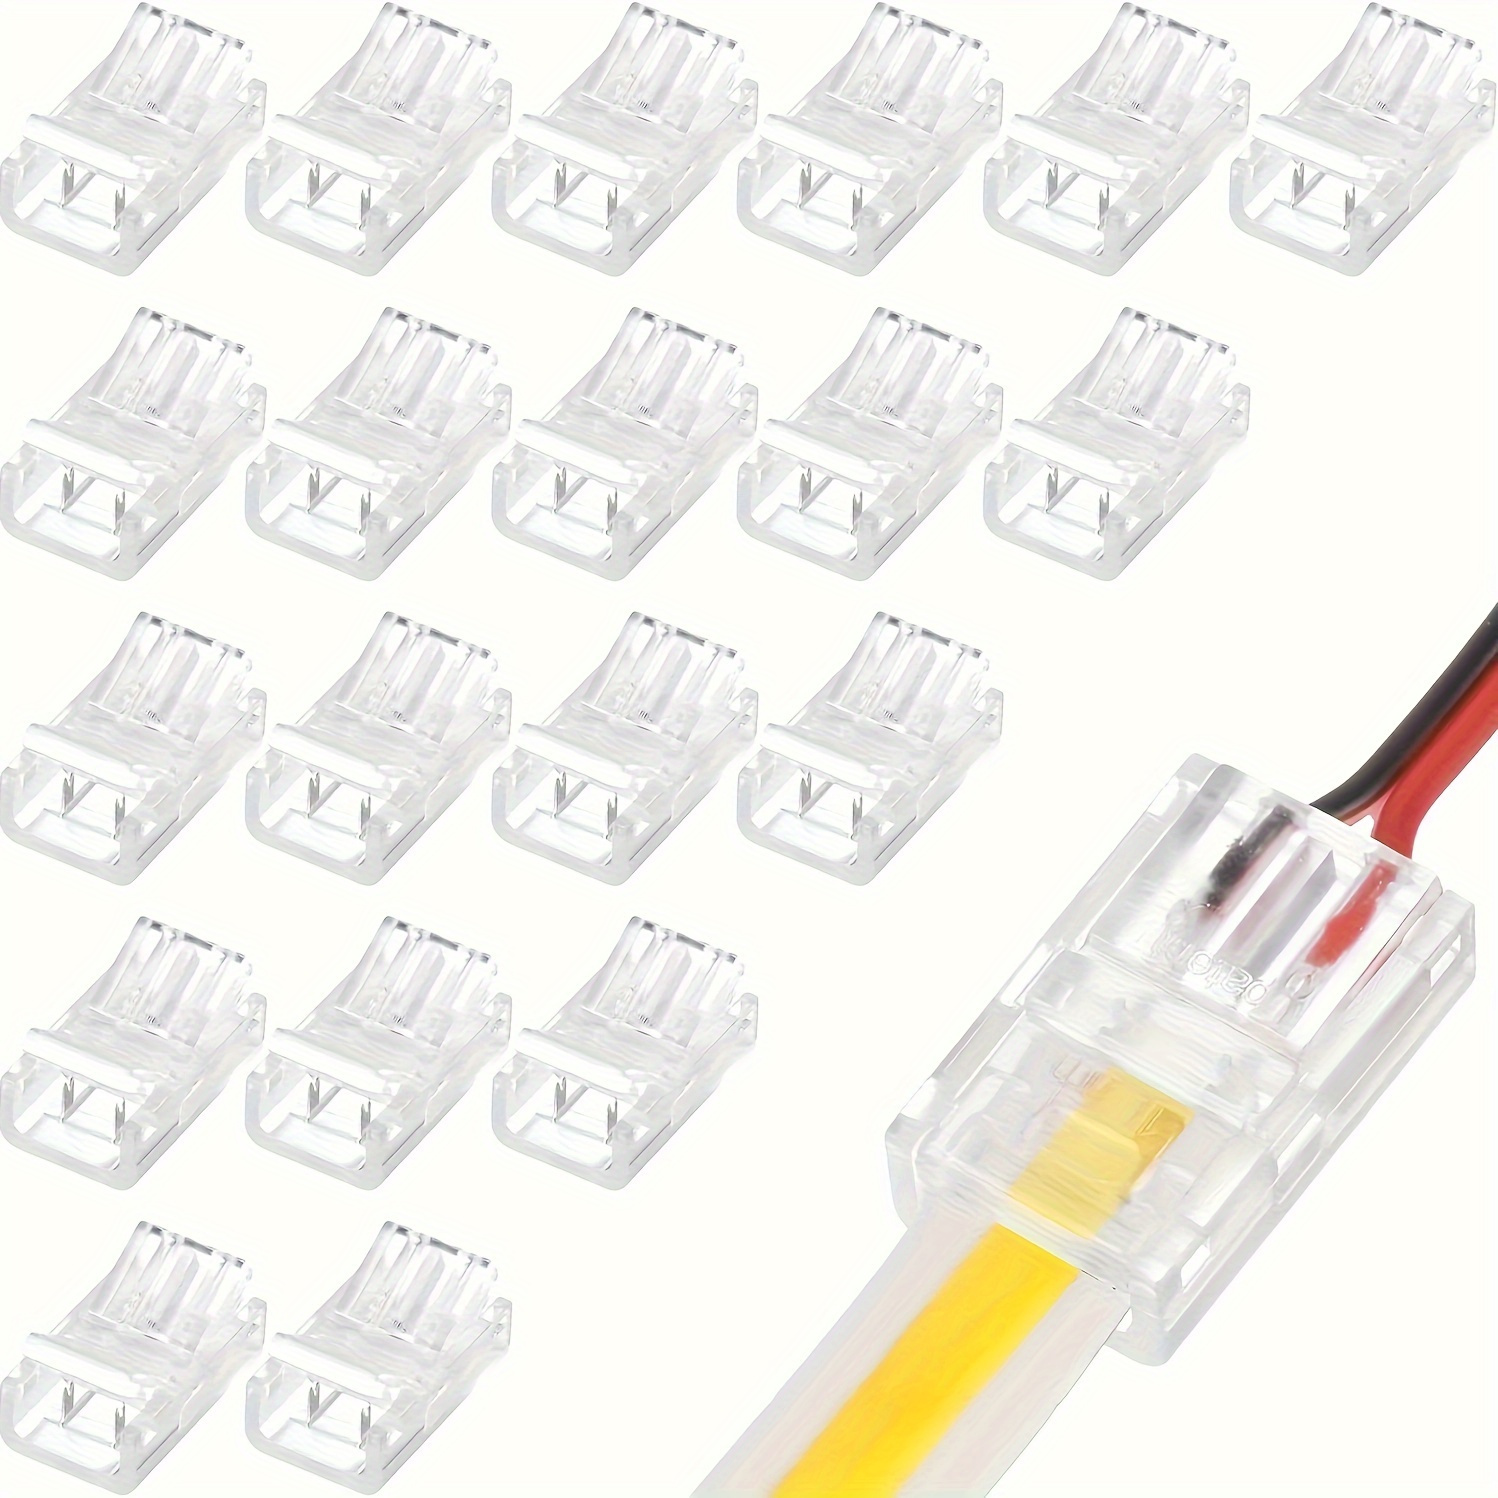 30 Pcs LED Tape Light Connectors Solderless led Light Strip Connectors 2  pin 8mm led Connectors for Strip Lights, Low Voltage Wire Connector for 5v